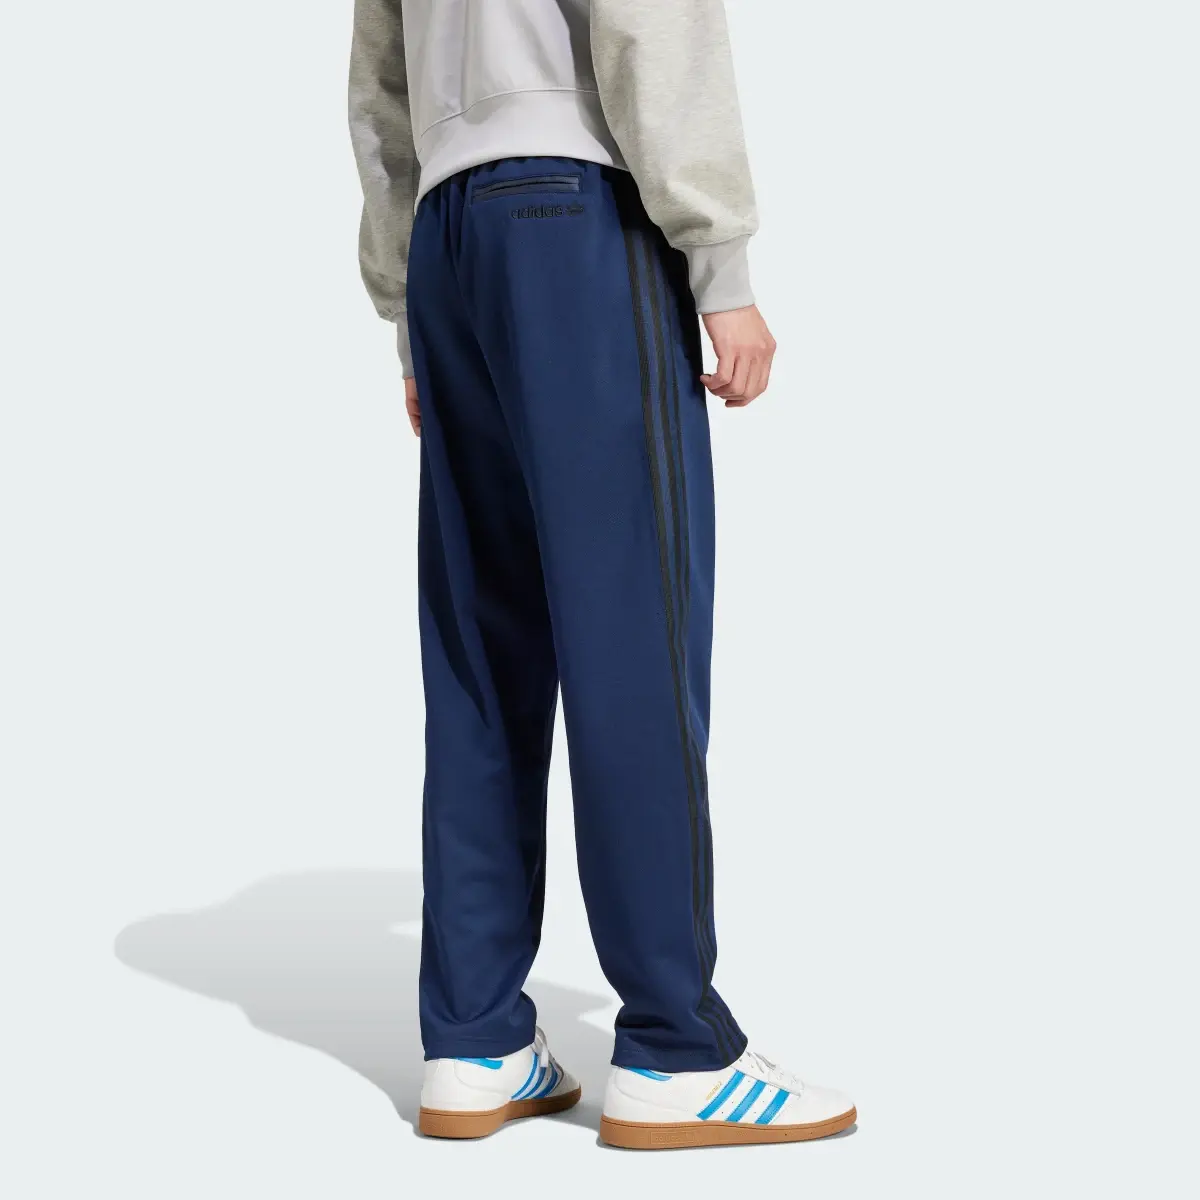 Adidas Premium Track Pants. 2